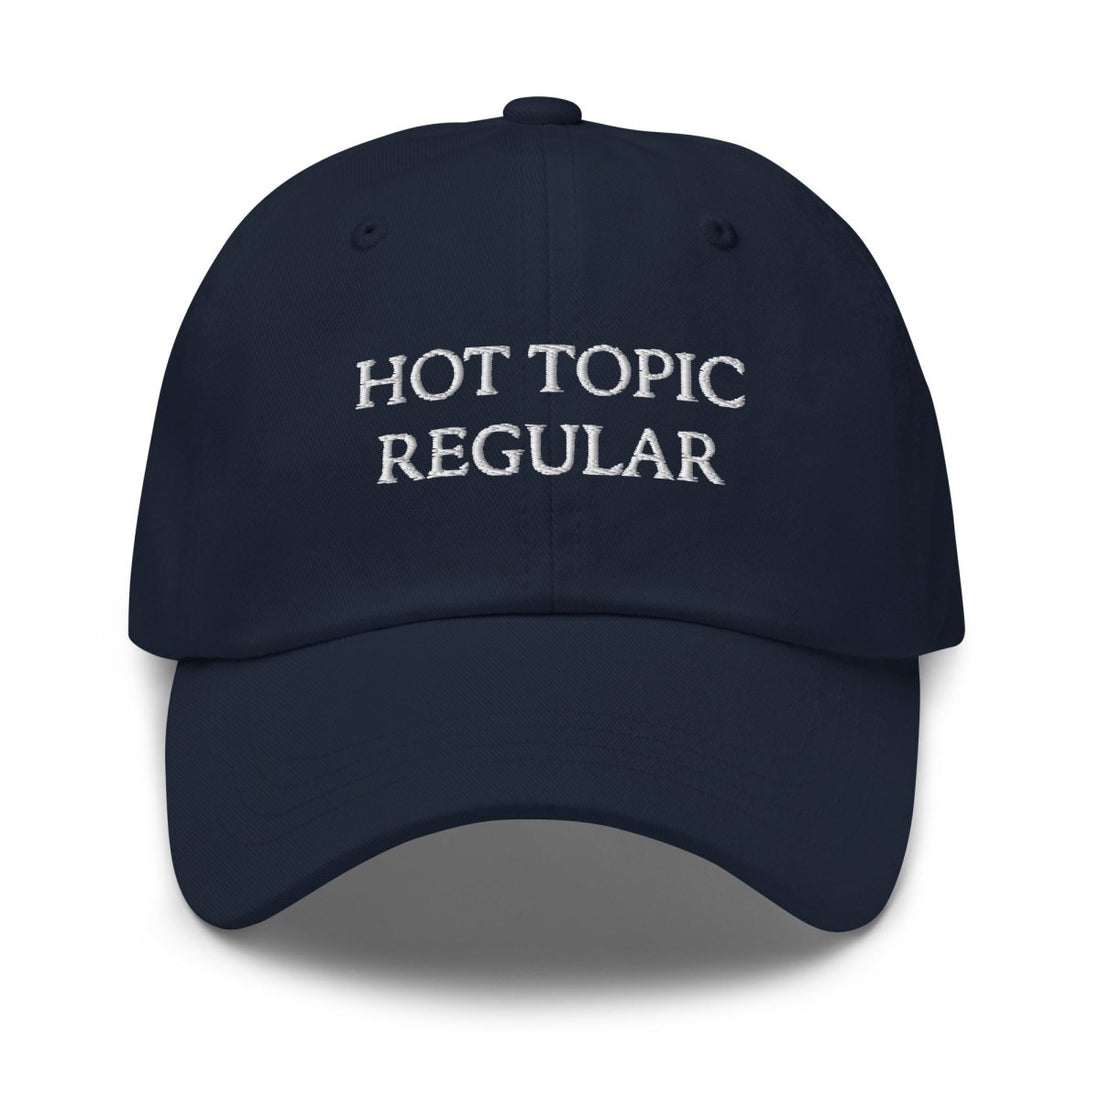 Hot Topic Regular Dad hat